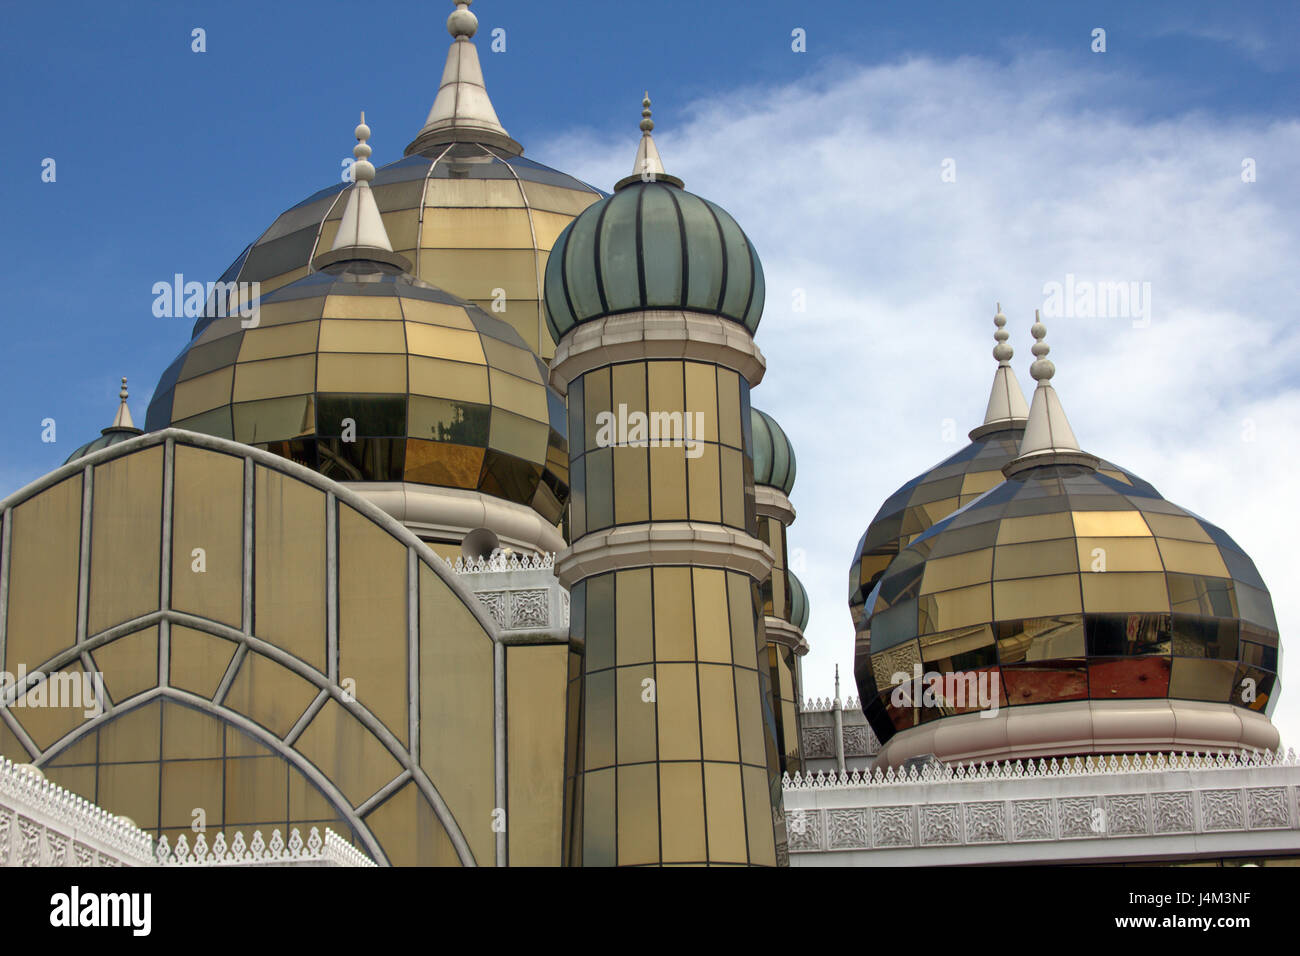 Multiple glass-walled domes of thCrystal Mosque at Kuala Terengganu, Terengganu state, Malaysia Stock Photo